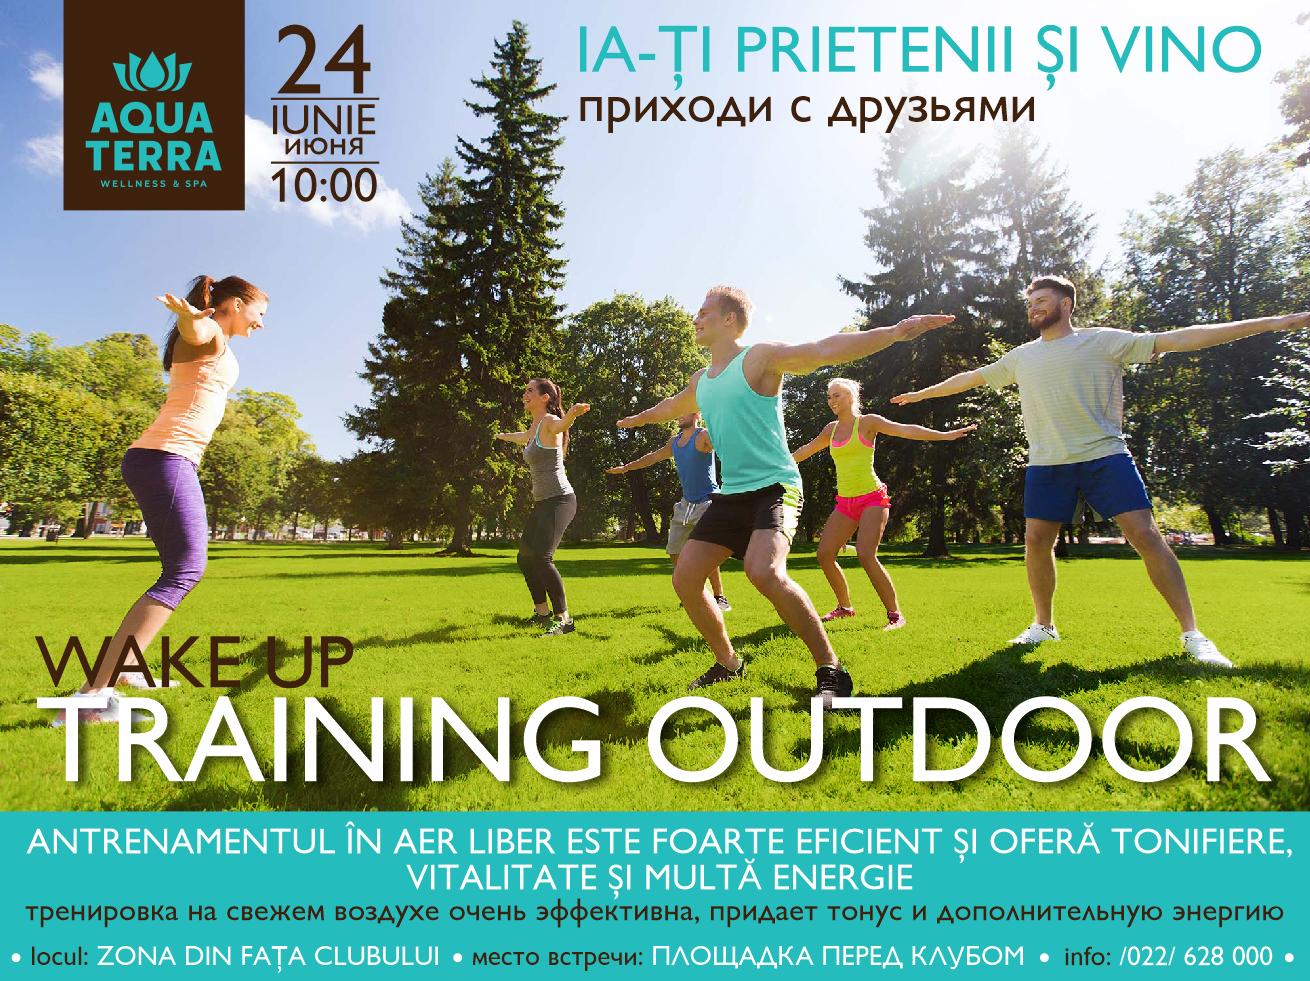 Wake up Training Outdoor в Aquaterra Wellness & SPA